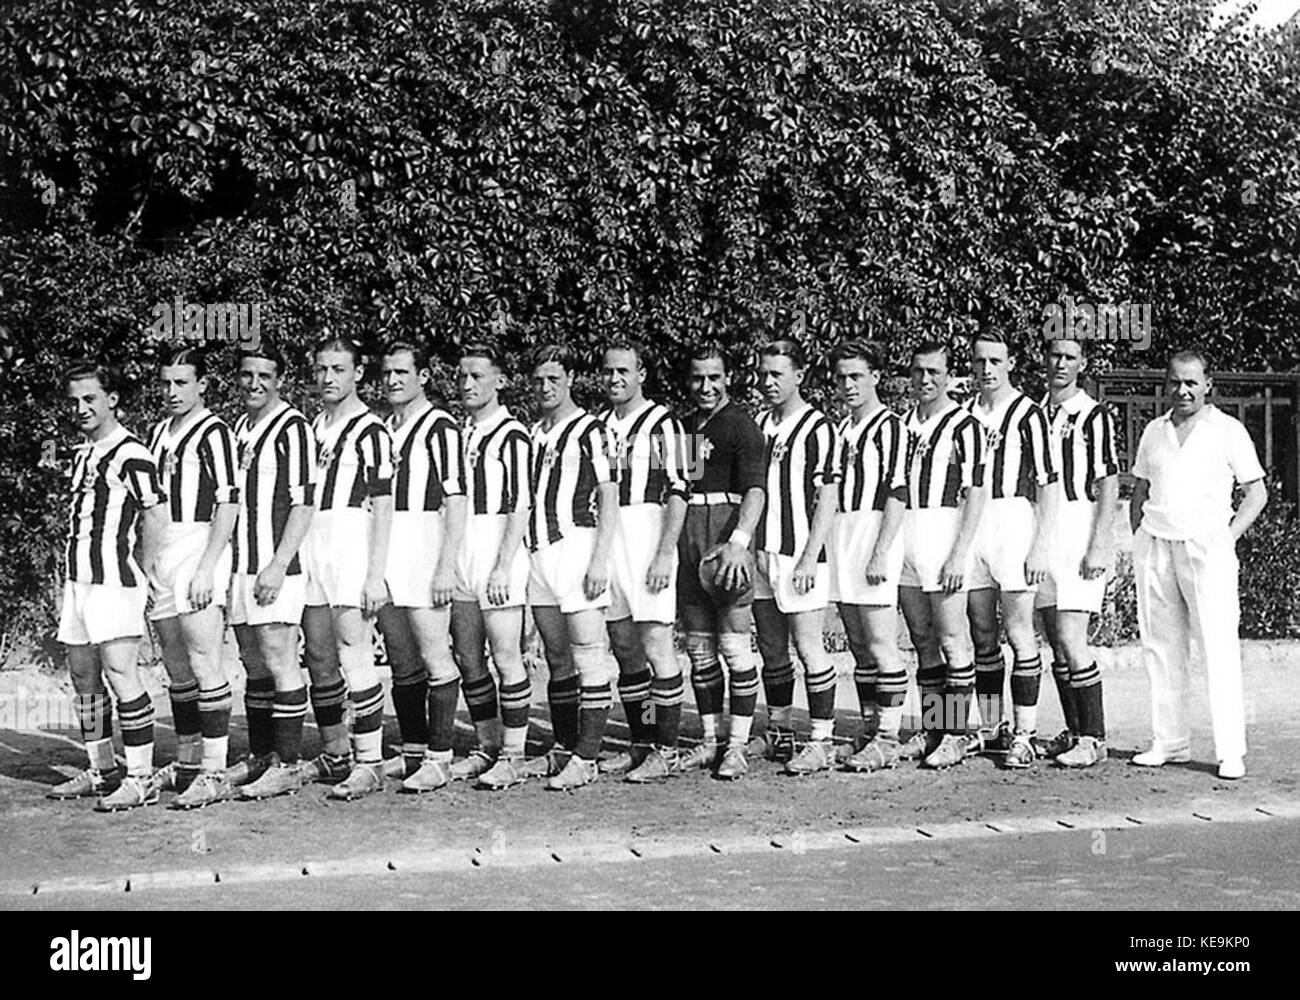 File:Juventus FC 1970-71.jpg - Wikimedia Commons